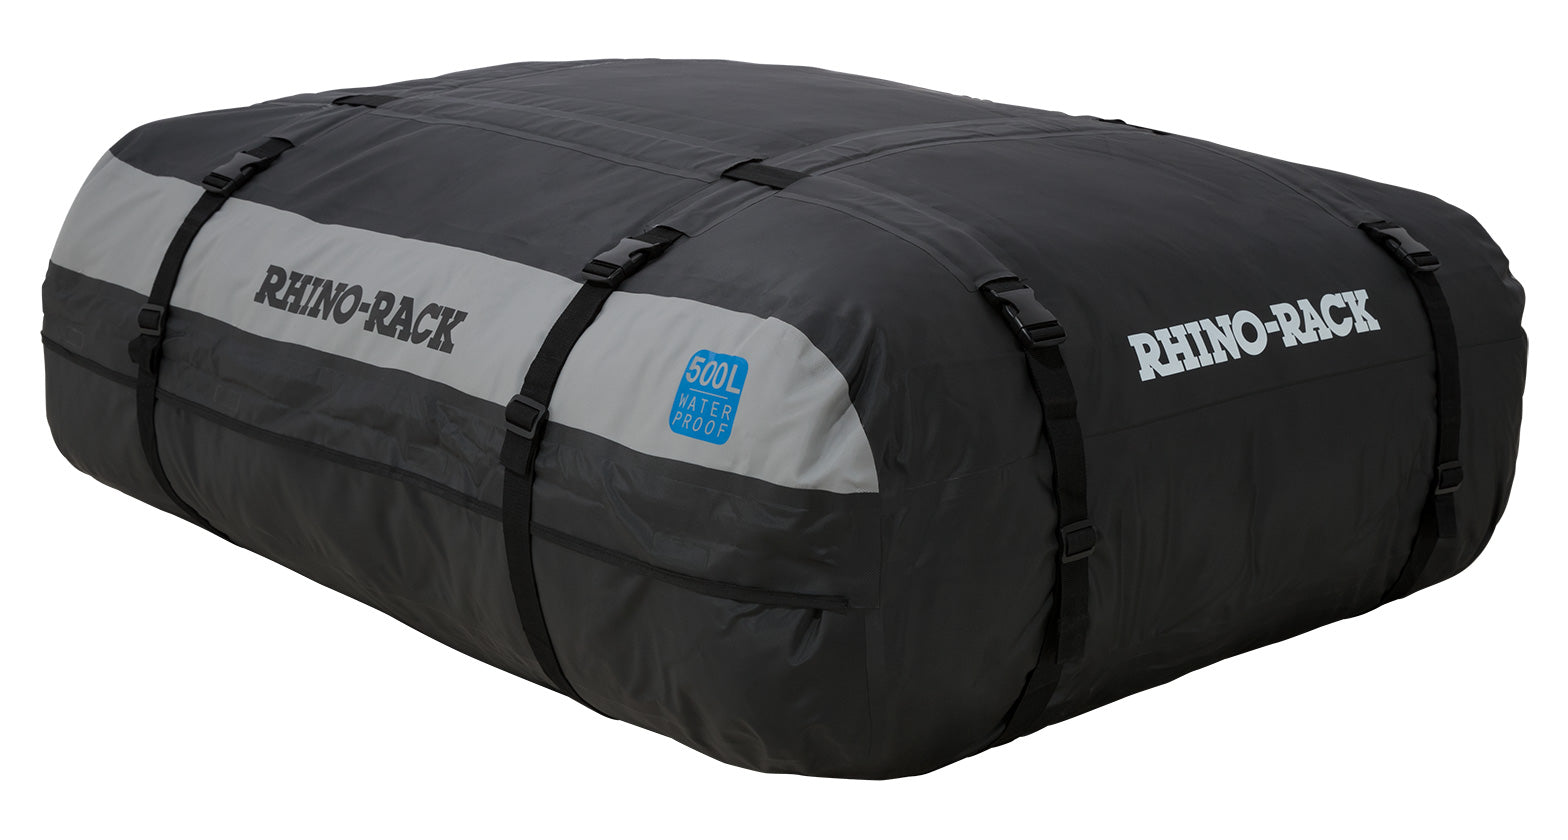 Rhino Rack Weatherproof Luggage Bag, 500l